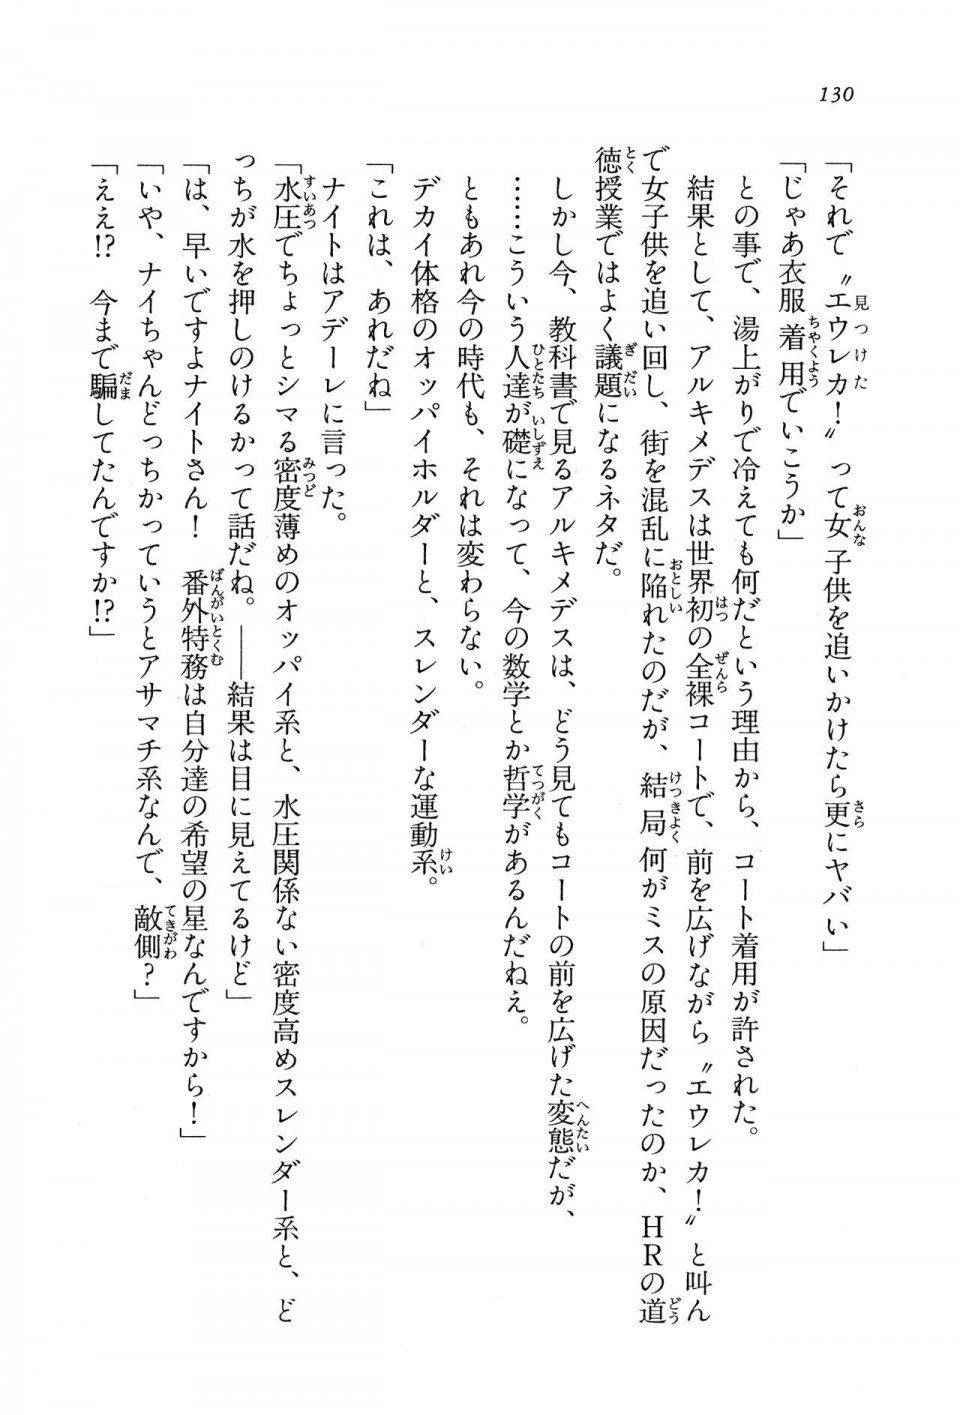 Kyoukai Senjou no Horizon BD Special Mininovel Vol 8(4B) - Photo #134